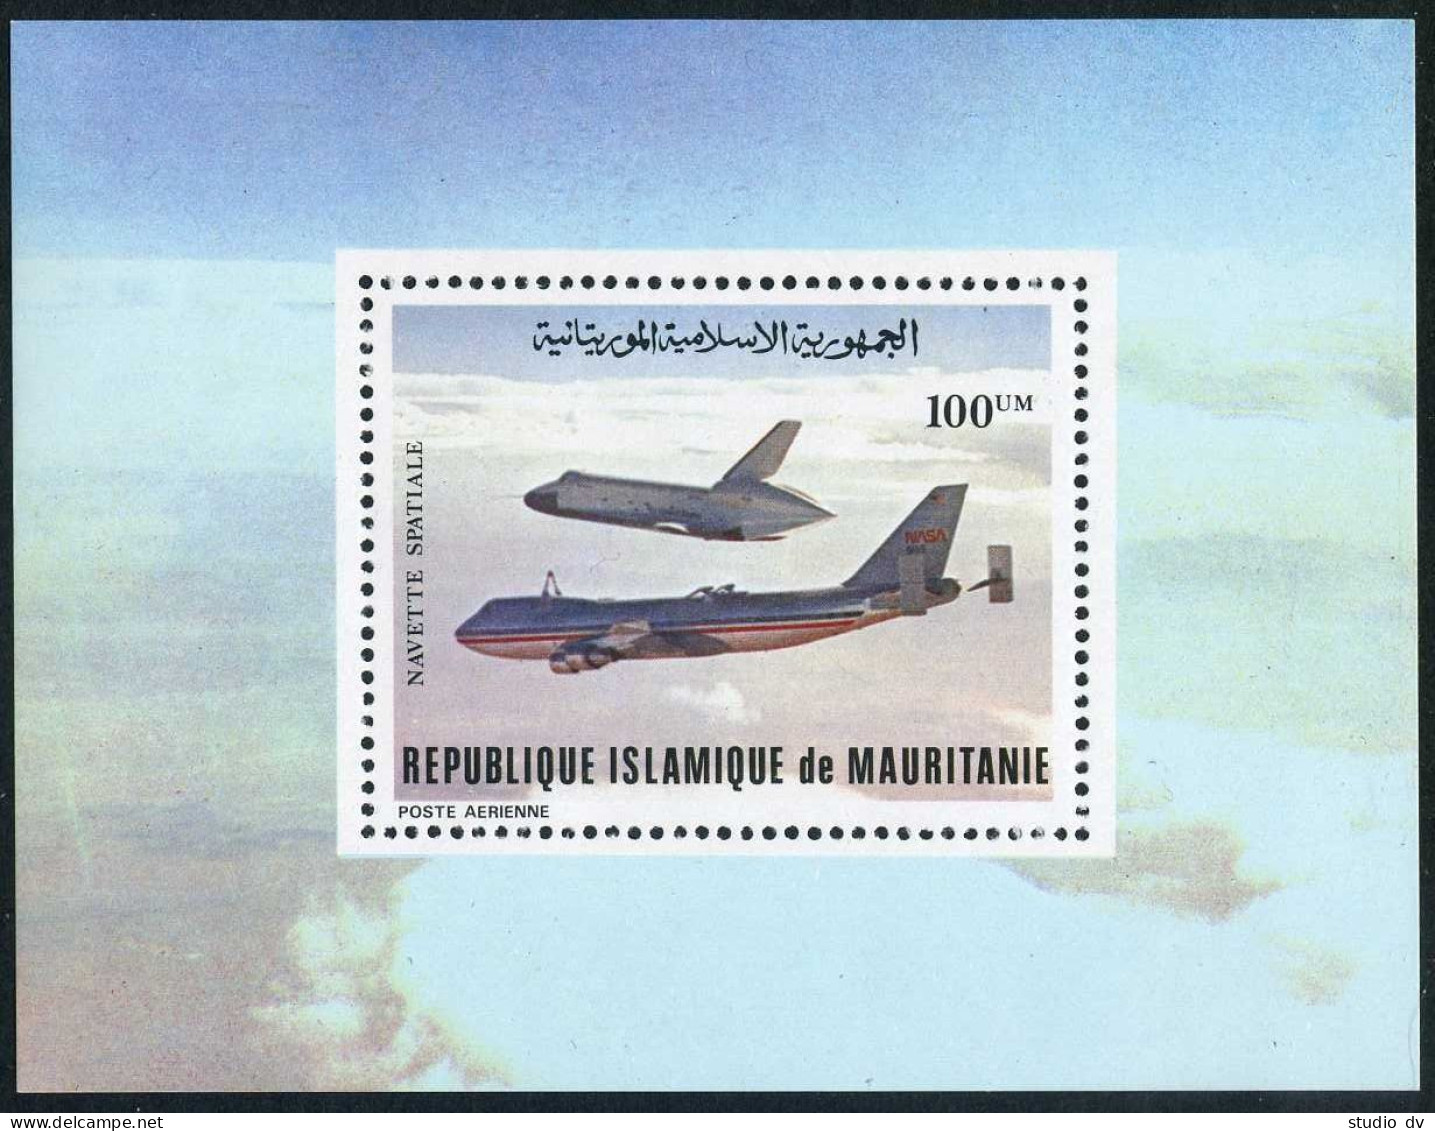 Mauritania C202-C205,C206,MNH.Michel 715-718,Bl.31. Columbia Space Shuttle,1981. - Mauritanië (1960-...)